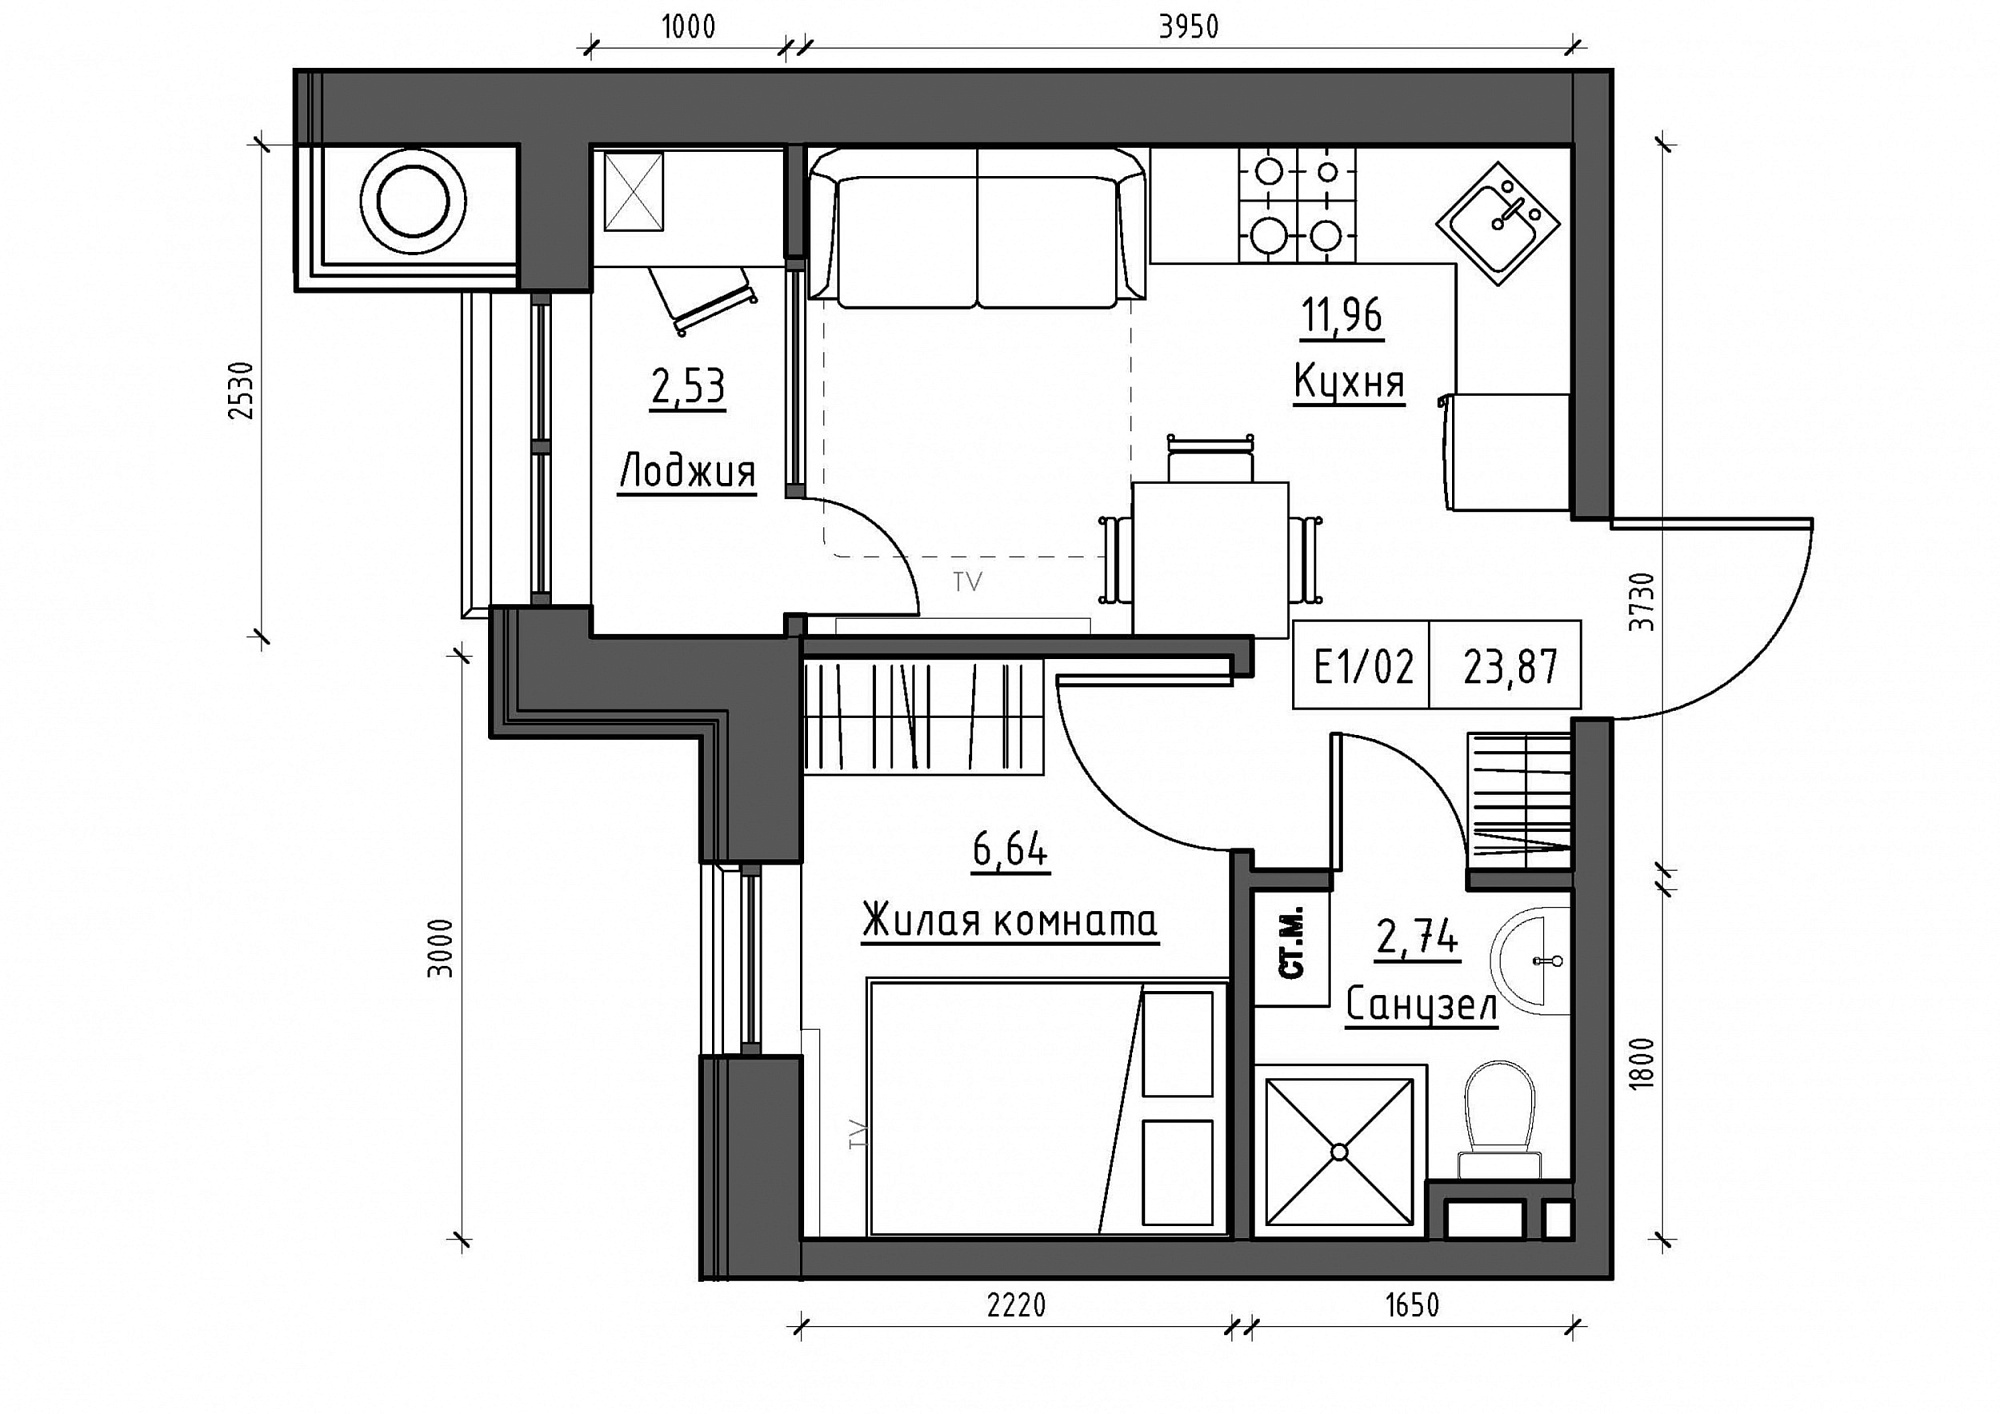 Planning 1-rm flats area 23.87m2, KS-011-01/0001.